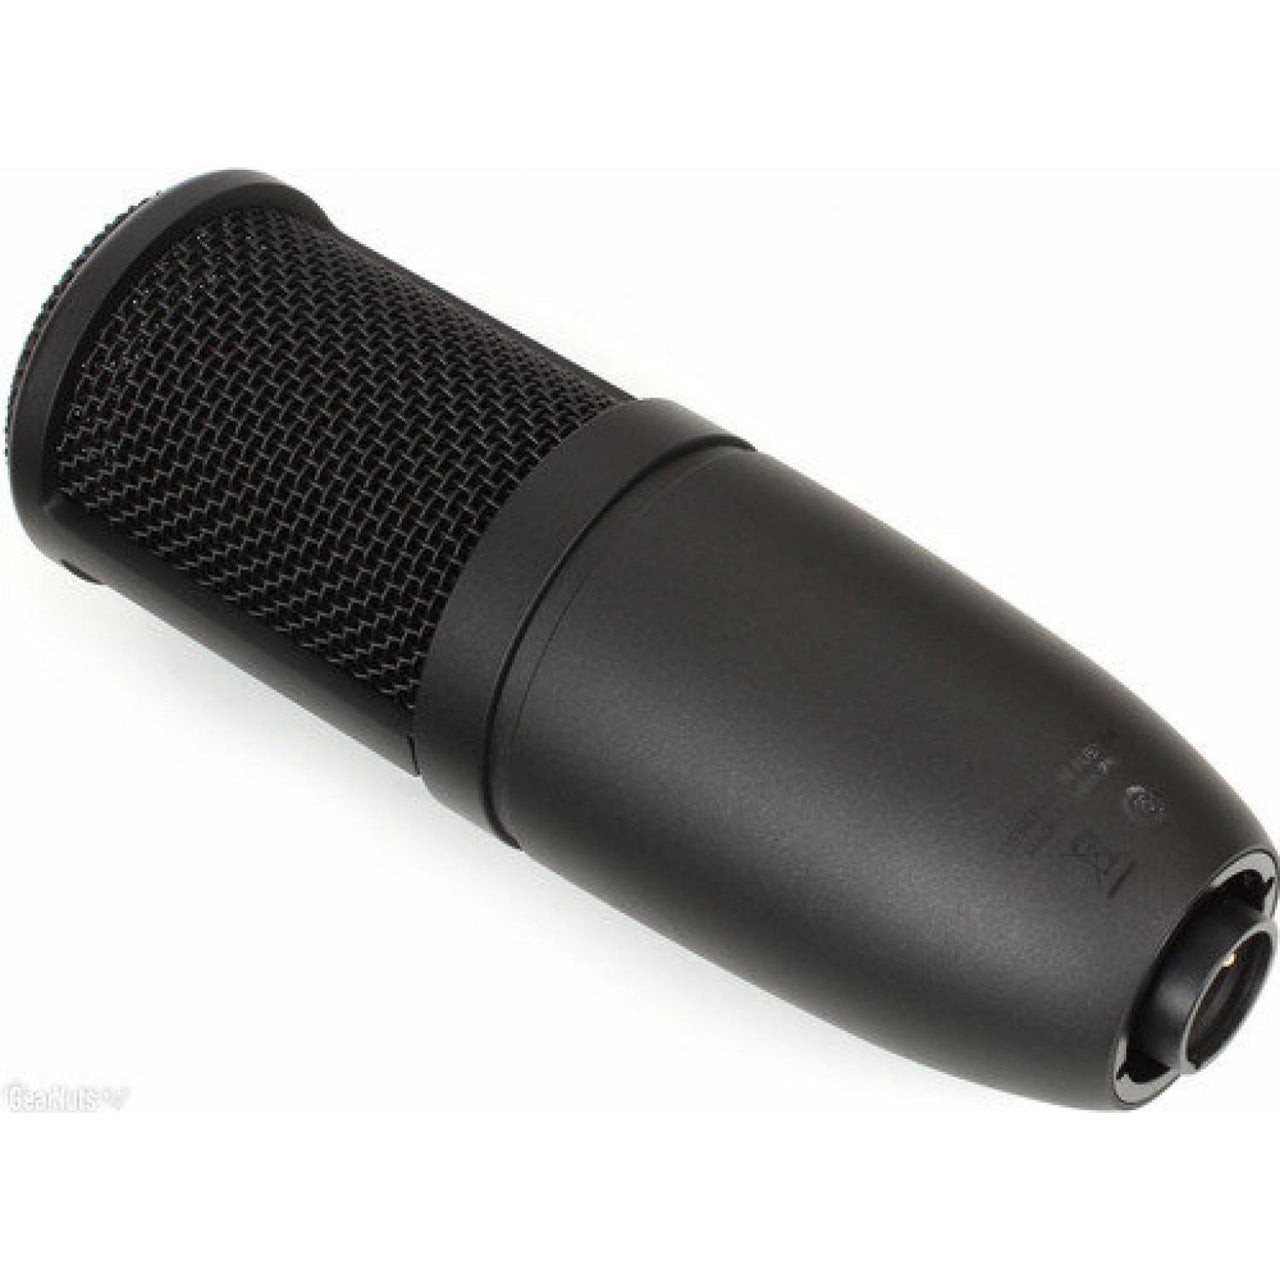 Microfono Akg De Estudio Condensador Xlr Serie Perception, P120